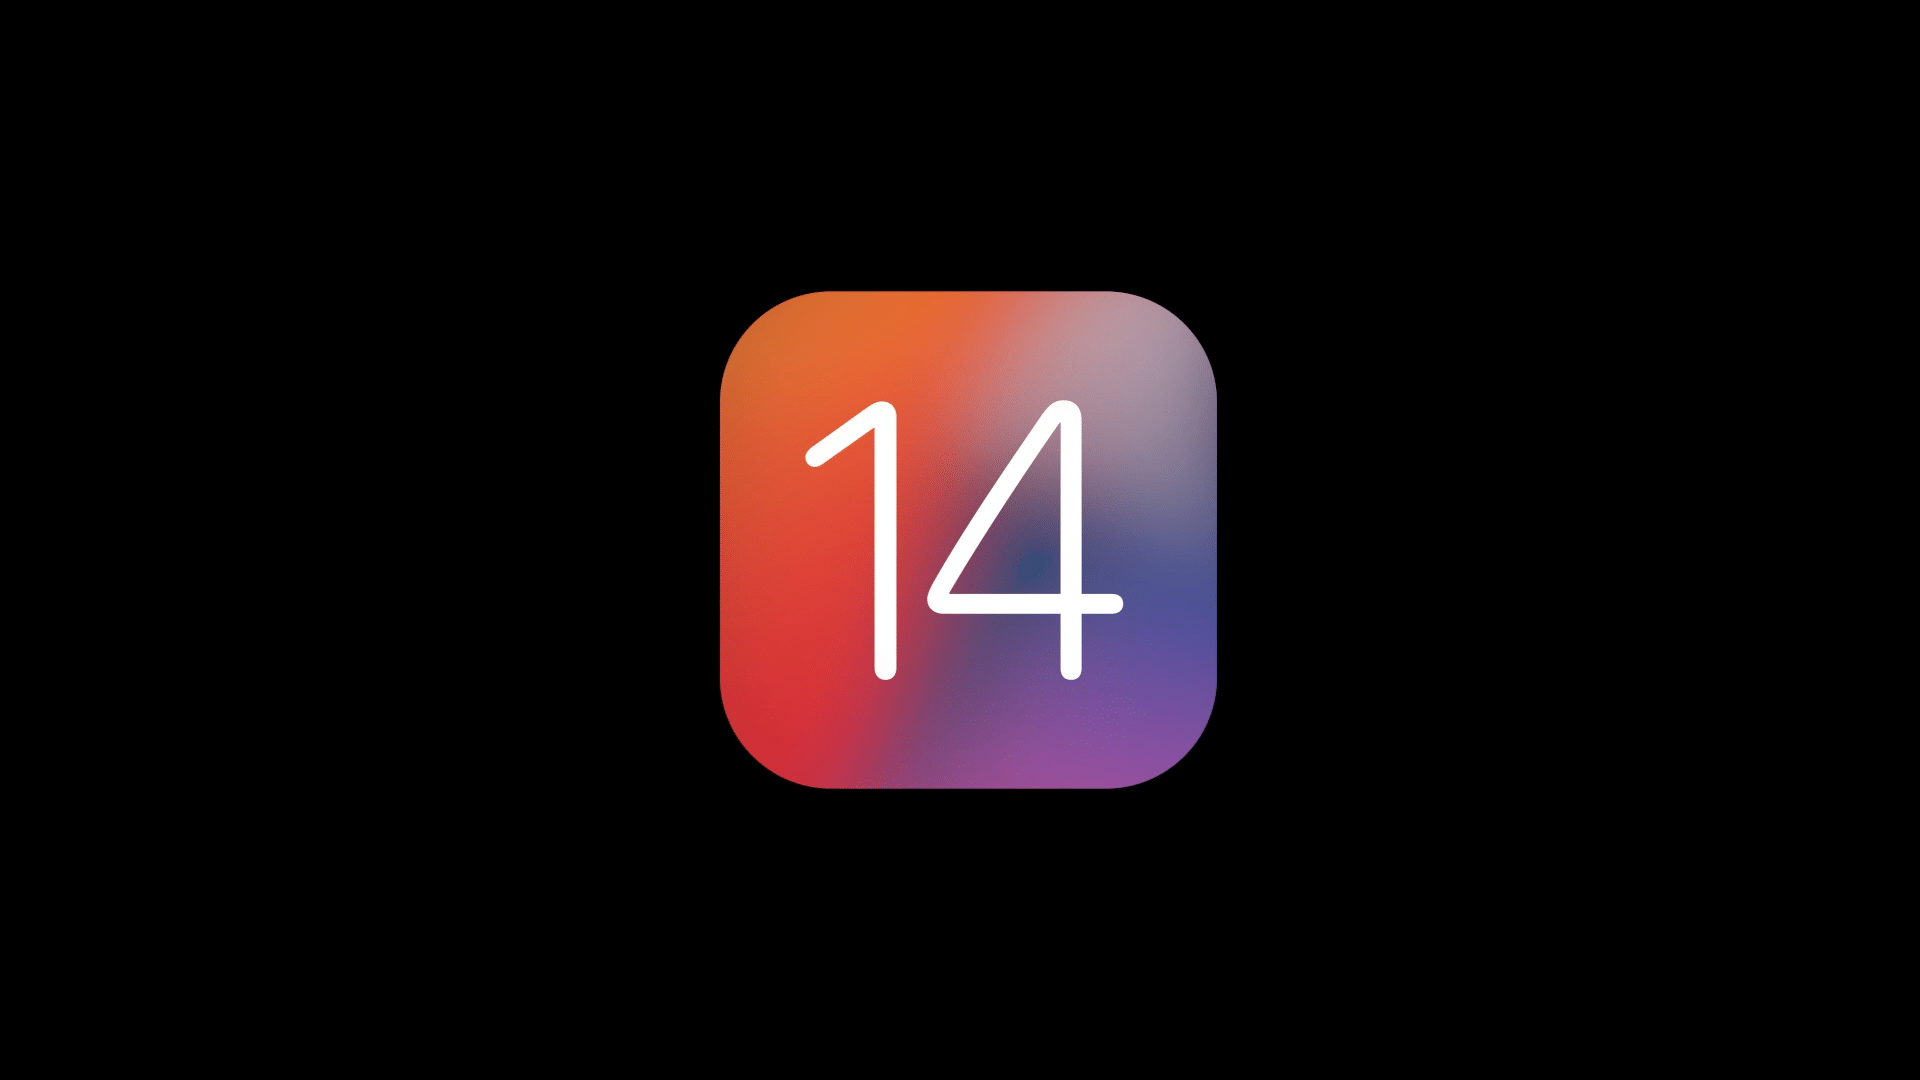 Install iOS 14 iPhone